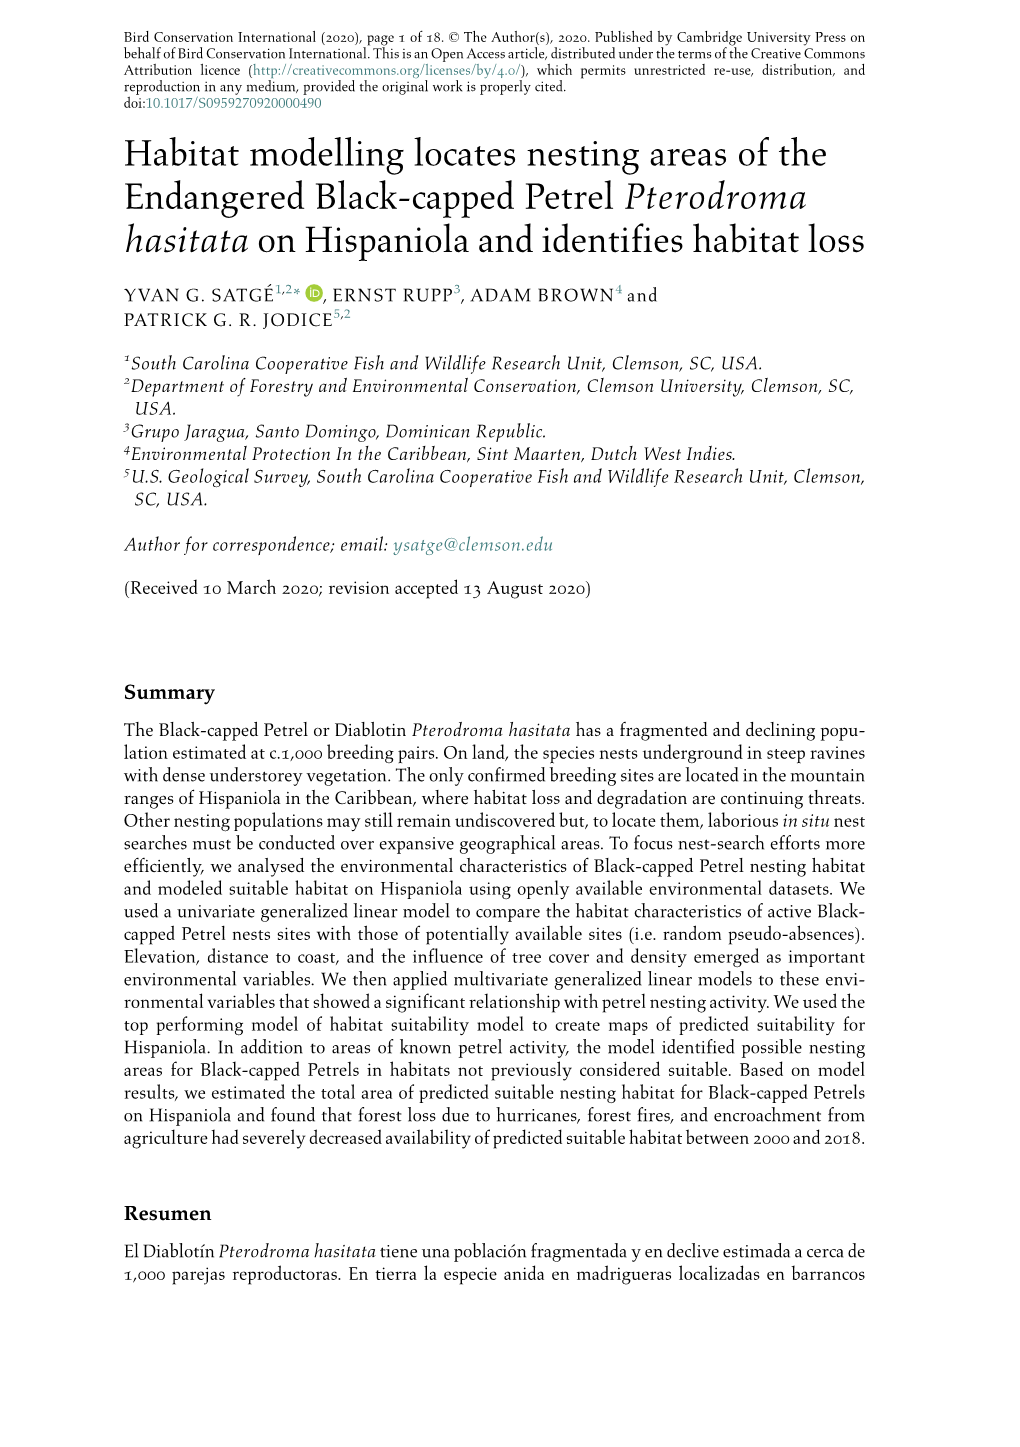 Habitat Modelling Locates Nesting Areas of the Endangered Black-Capped Petrel Pterodroma Hasitata on Hispaniola and Identifies Habitat Loss